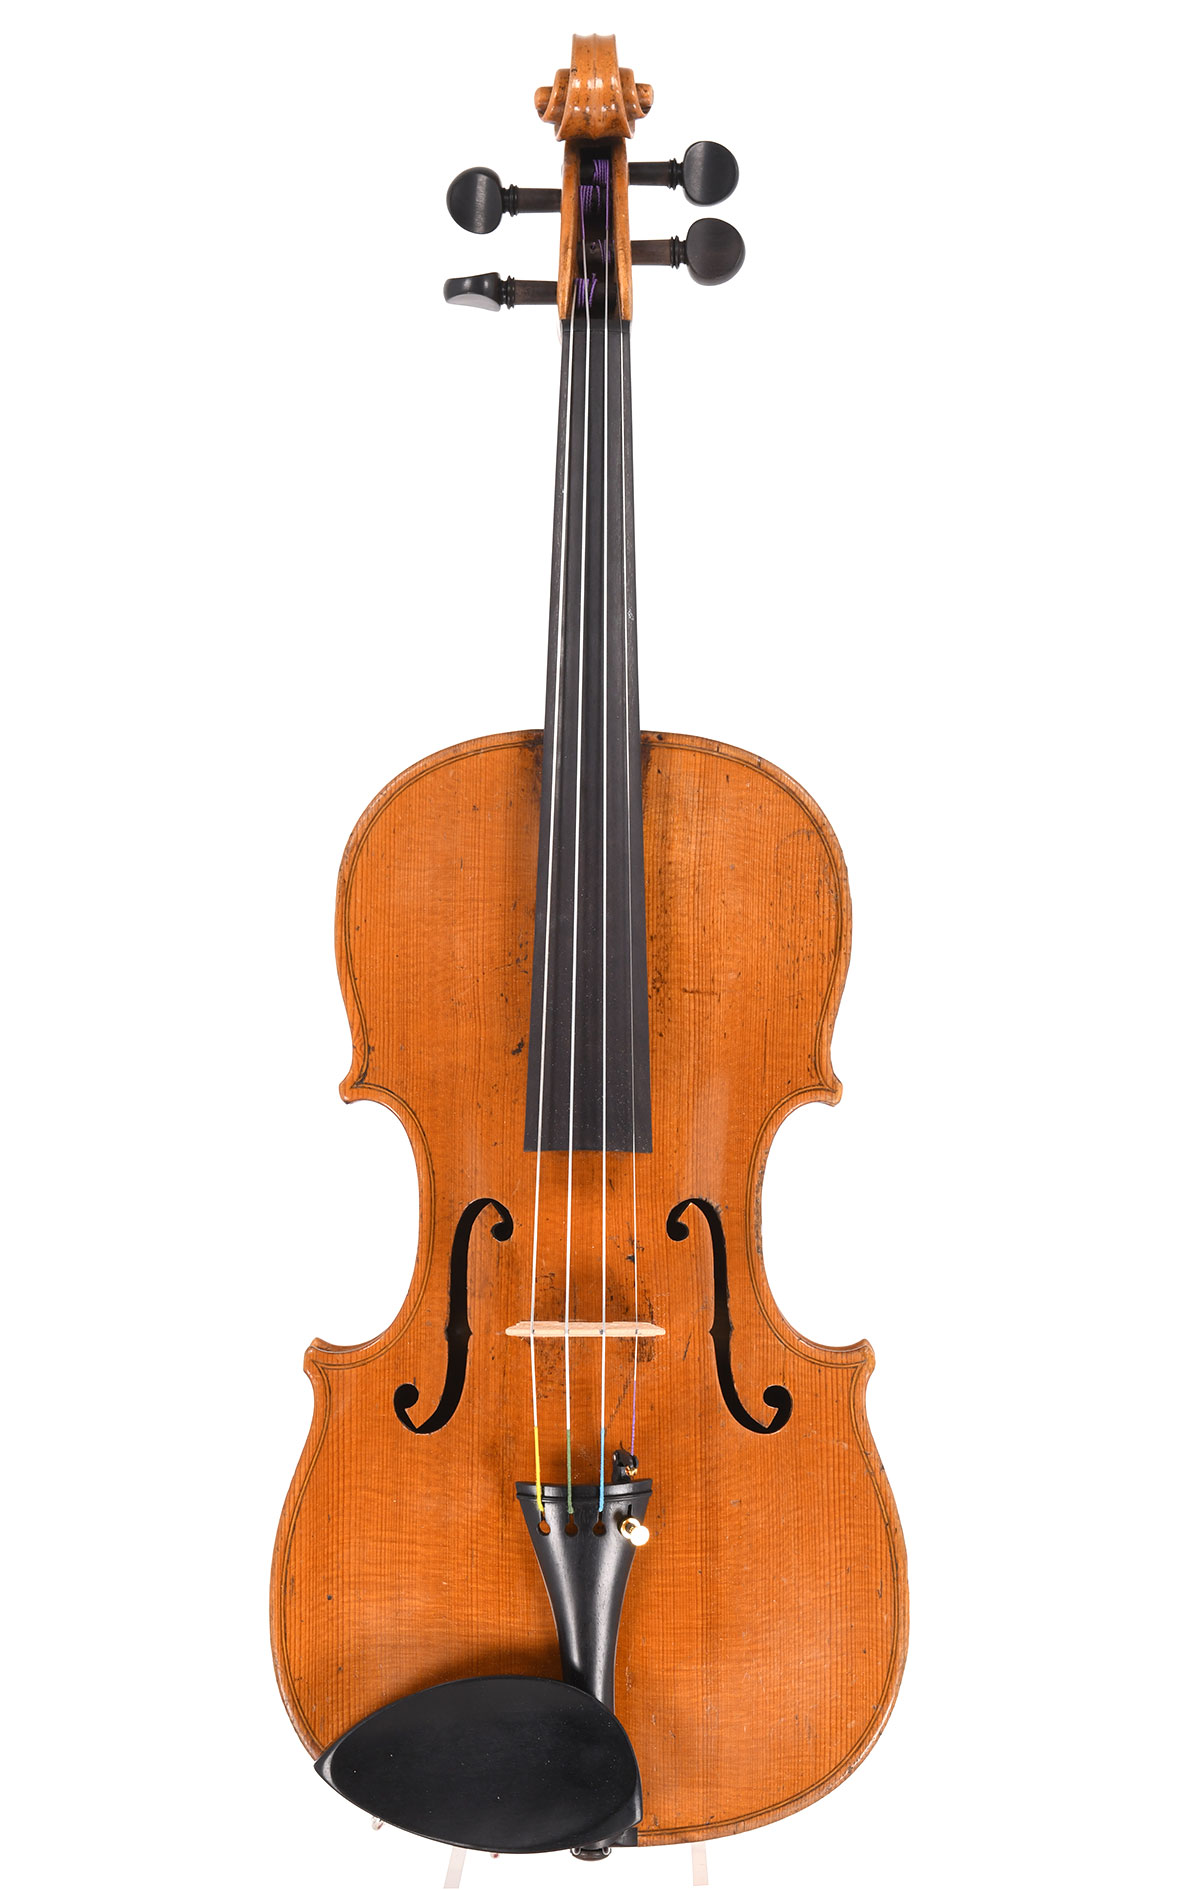 Klingenthal violin by David Hopf